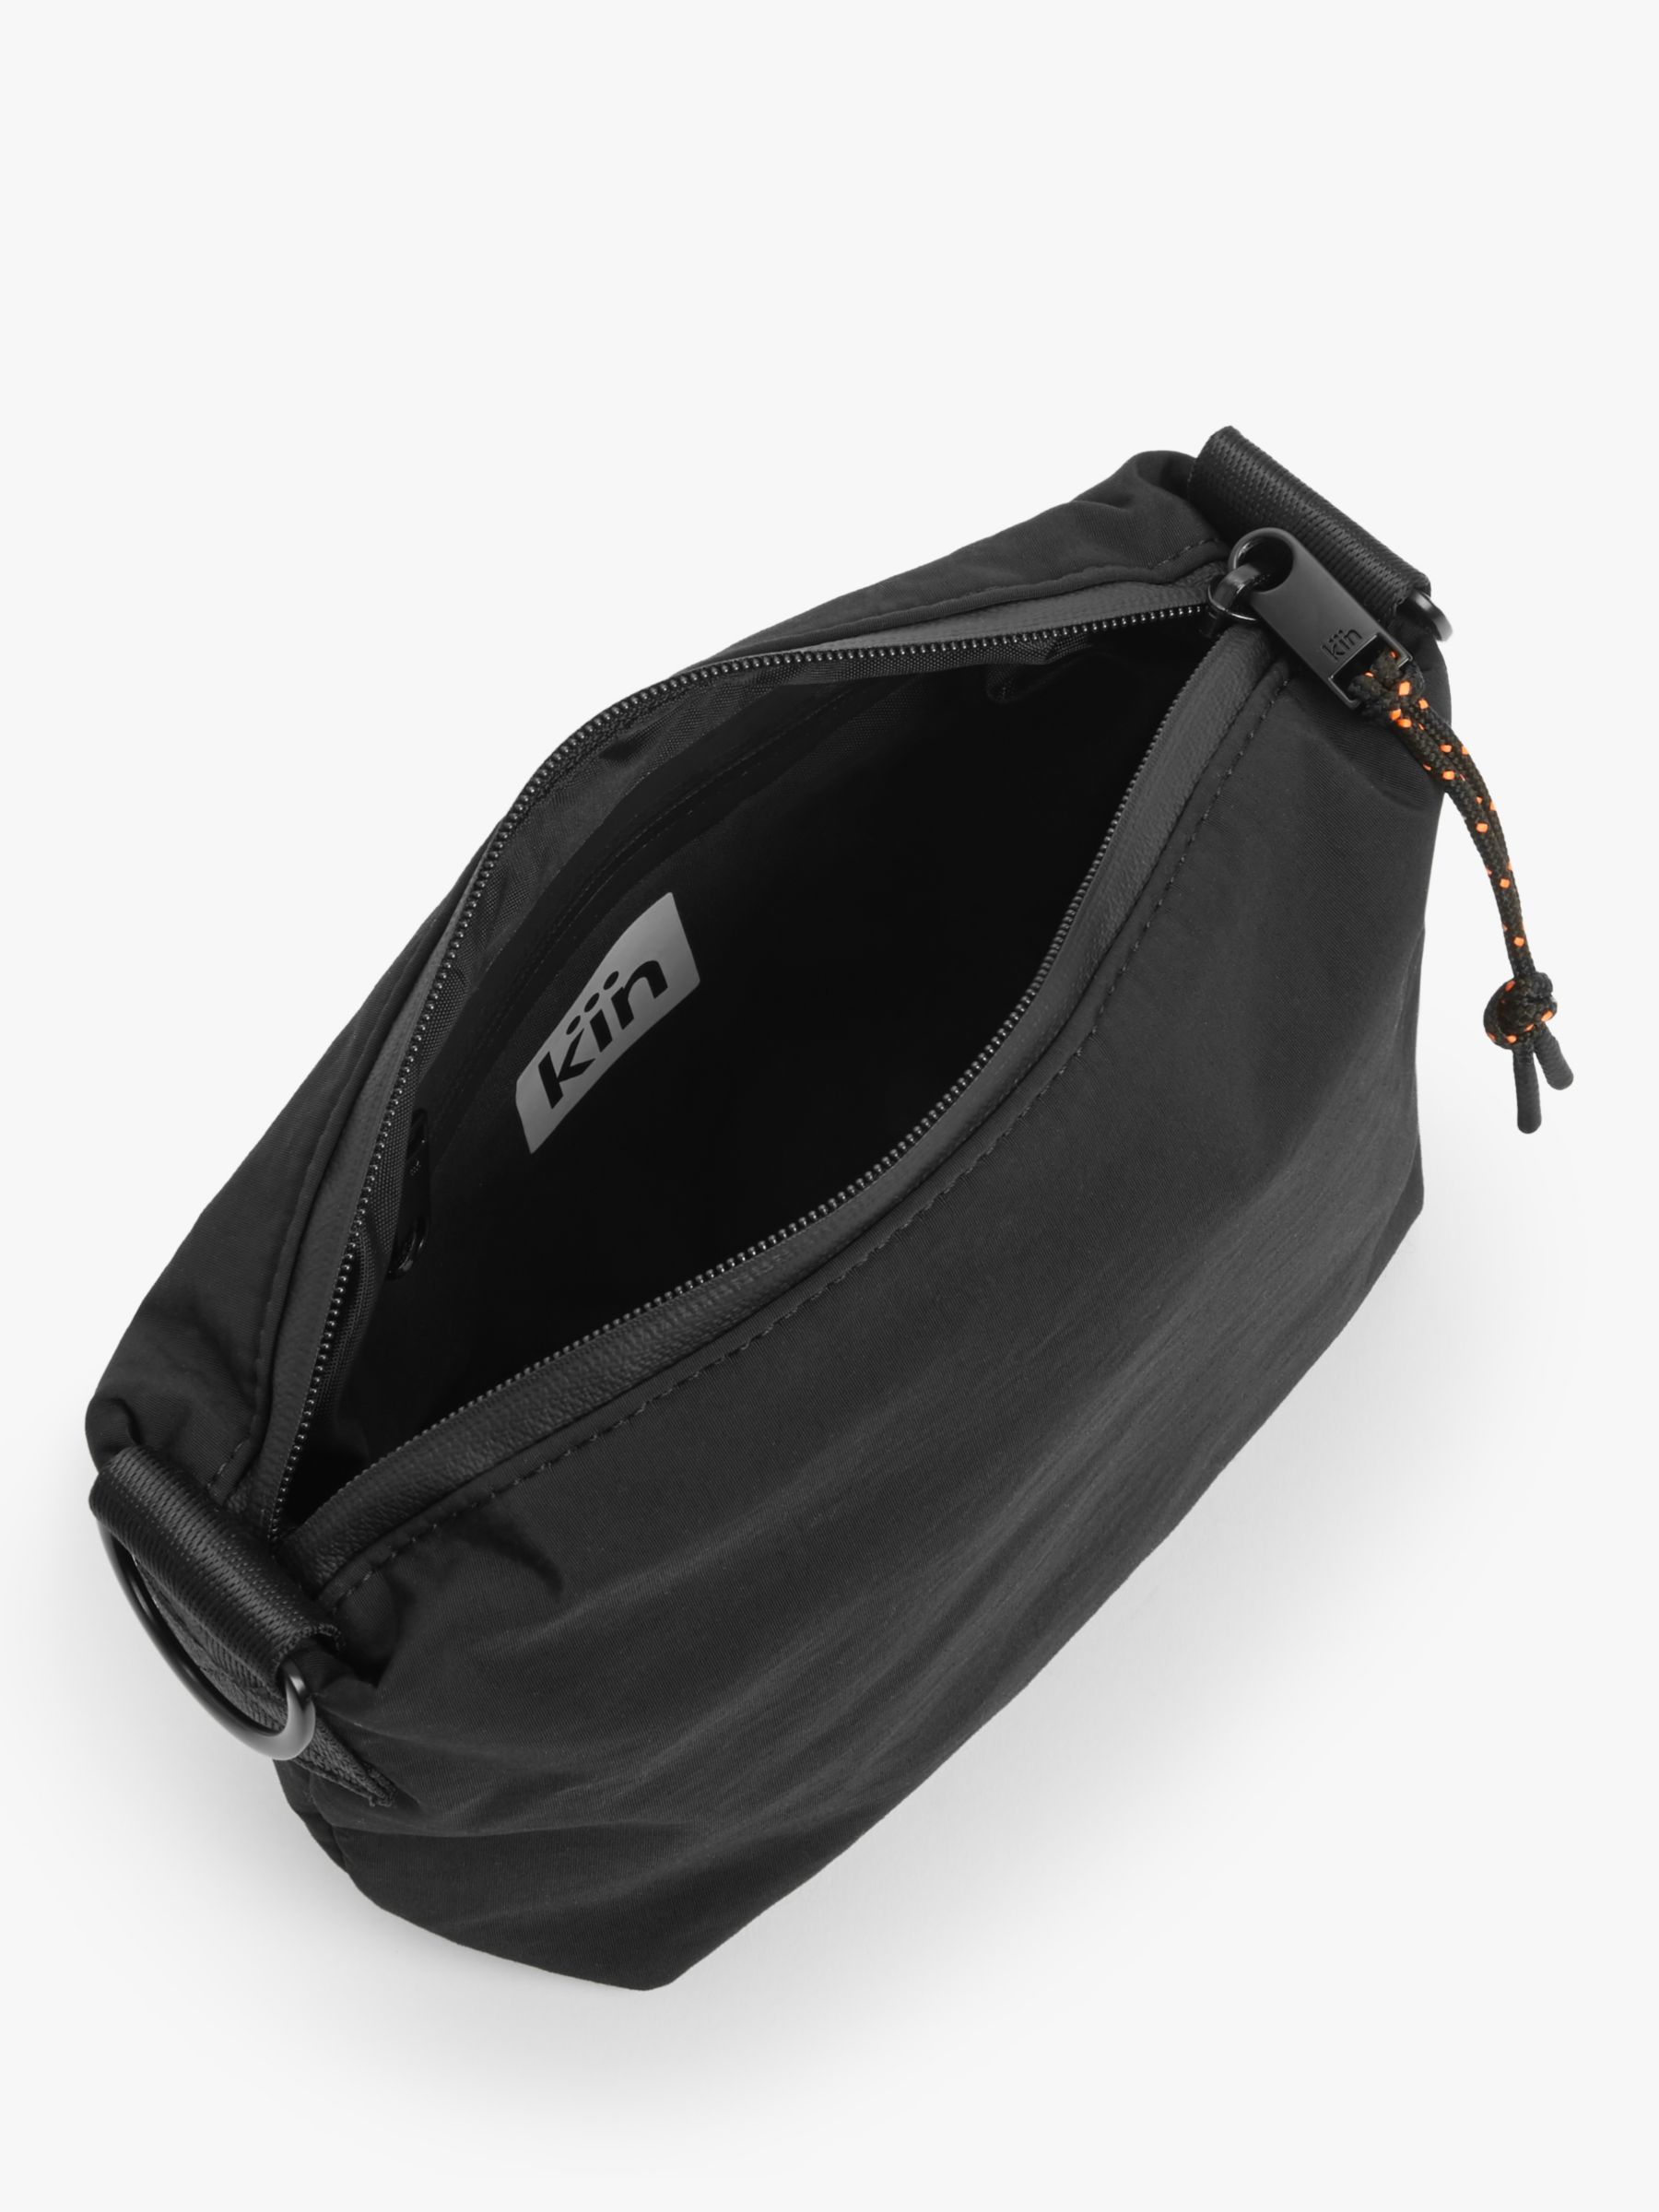 Kin Nylon Water Resistant Cross Body Bag, Black at John Lewis & Partners